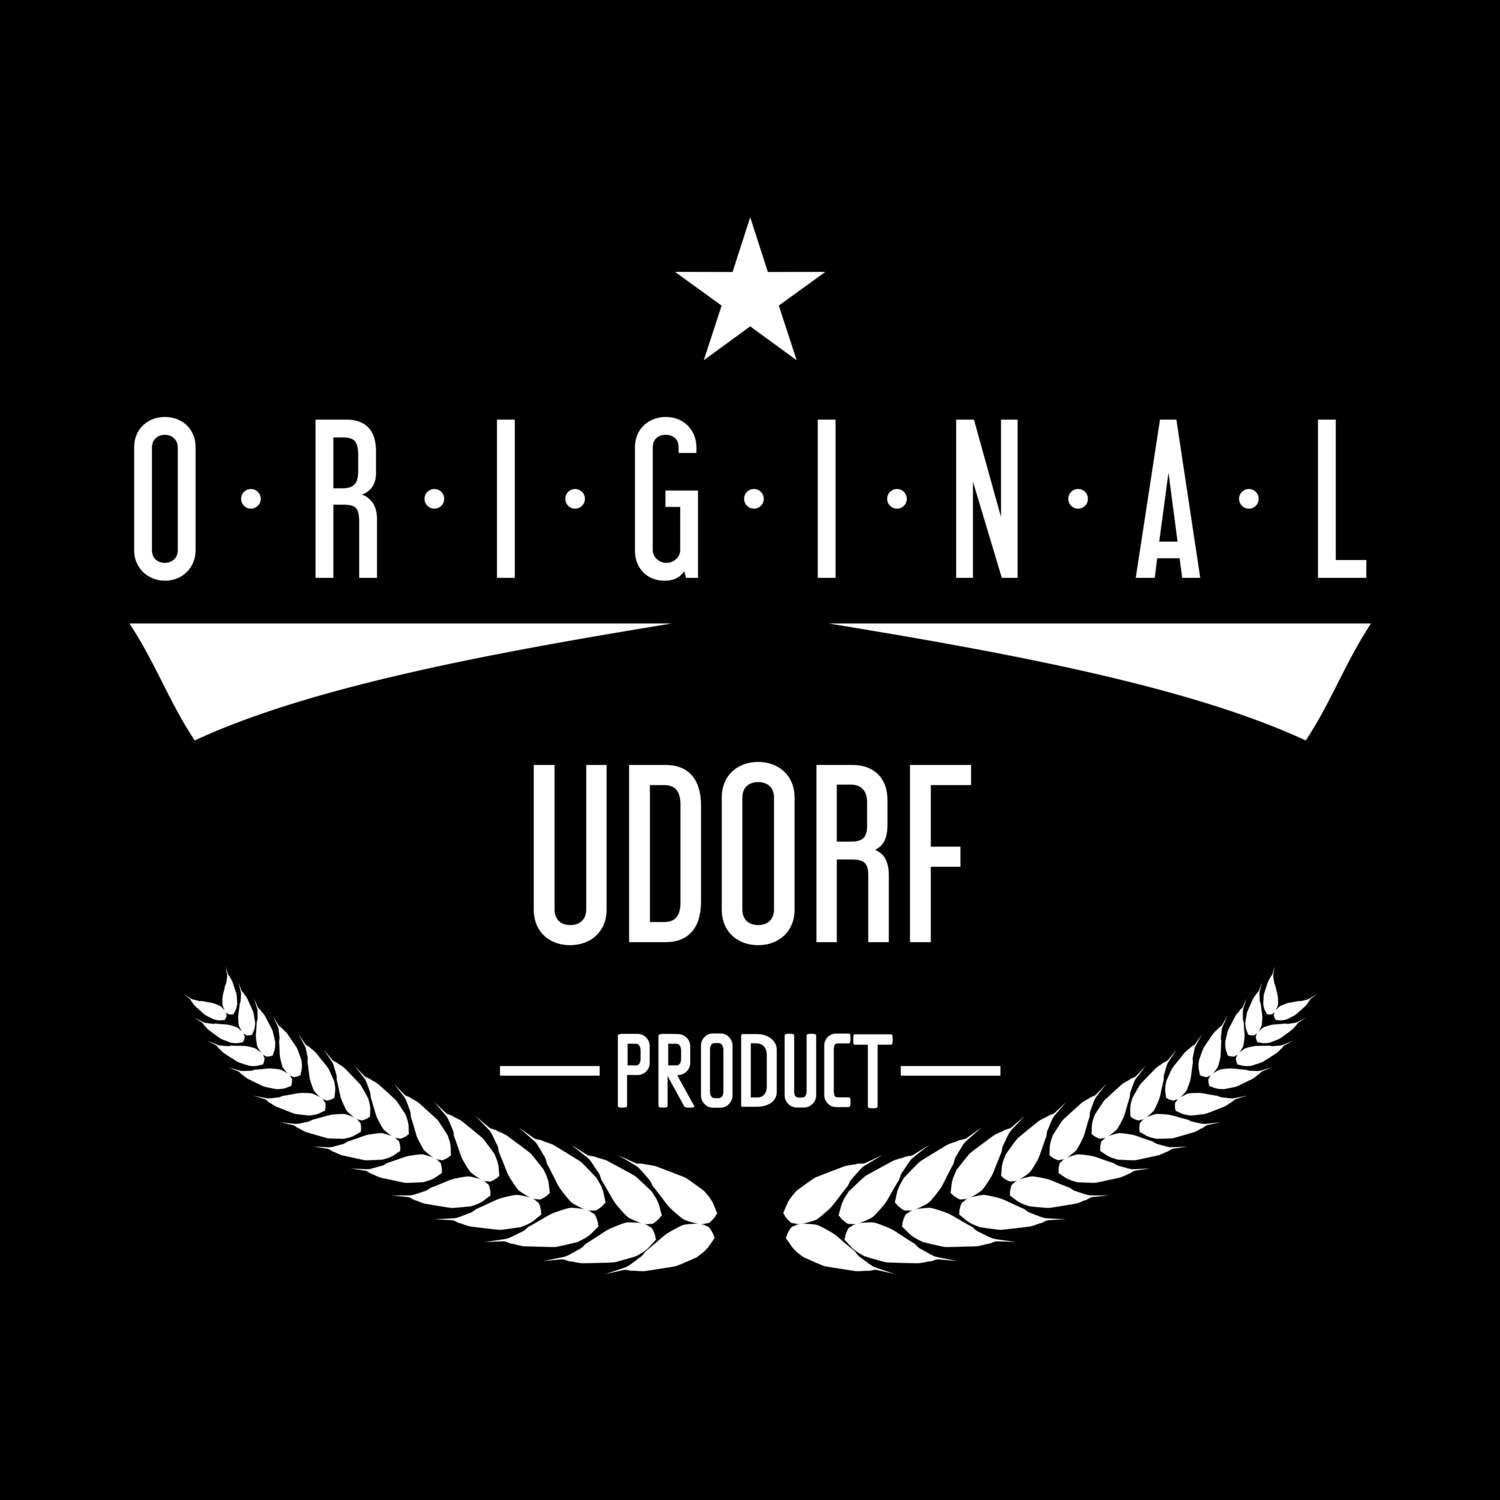 Udorf T-Shirt »Original Product«